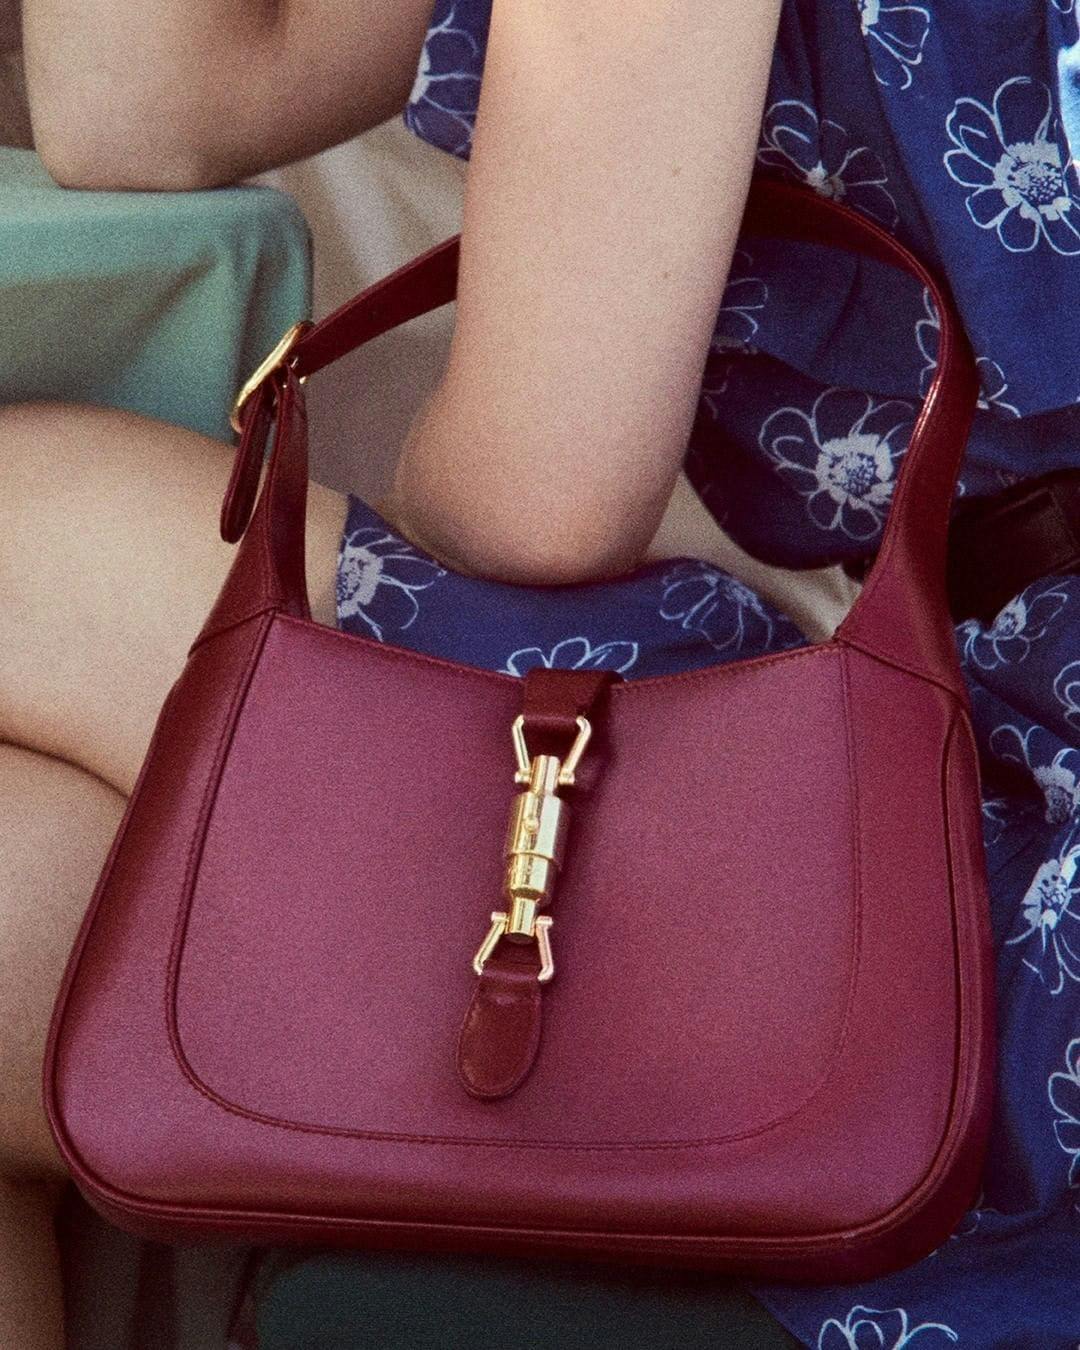 A purple handbag.